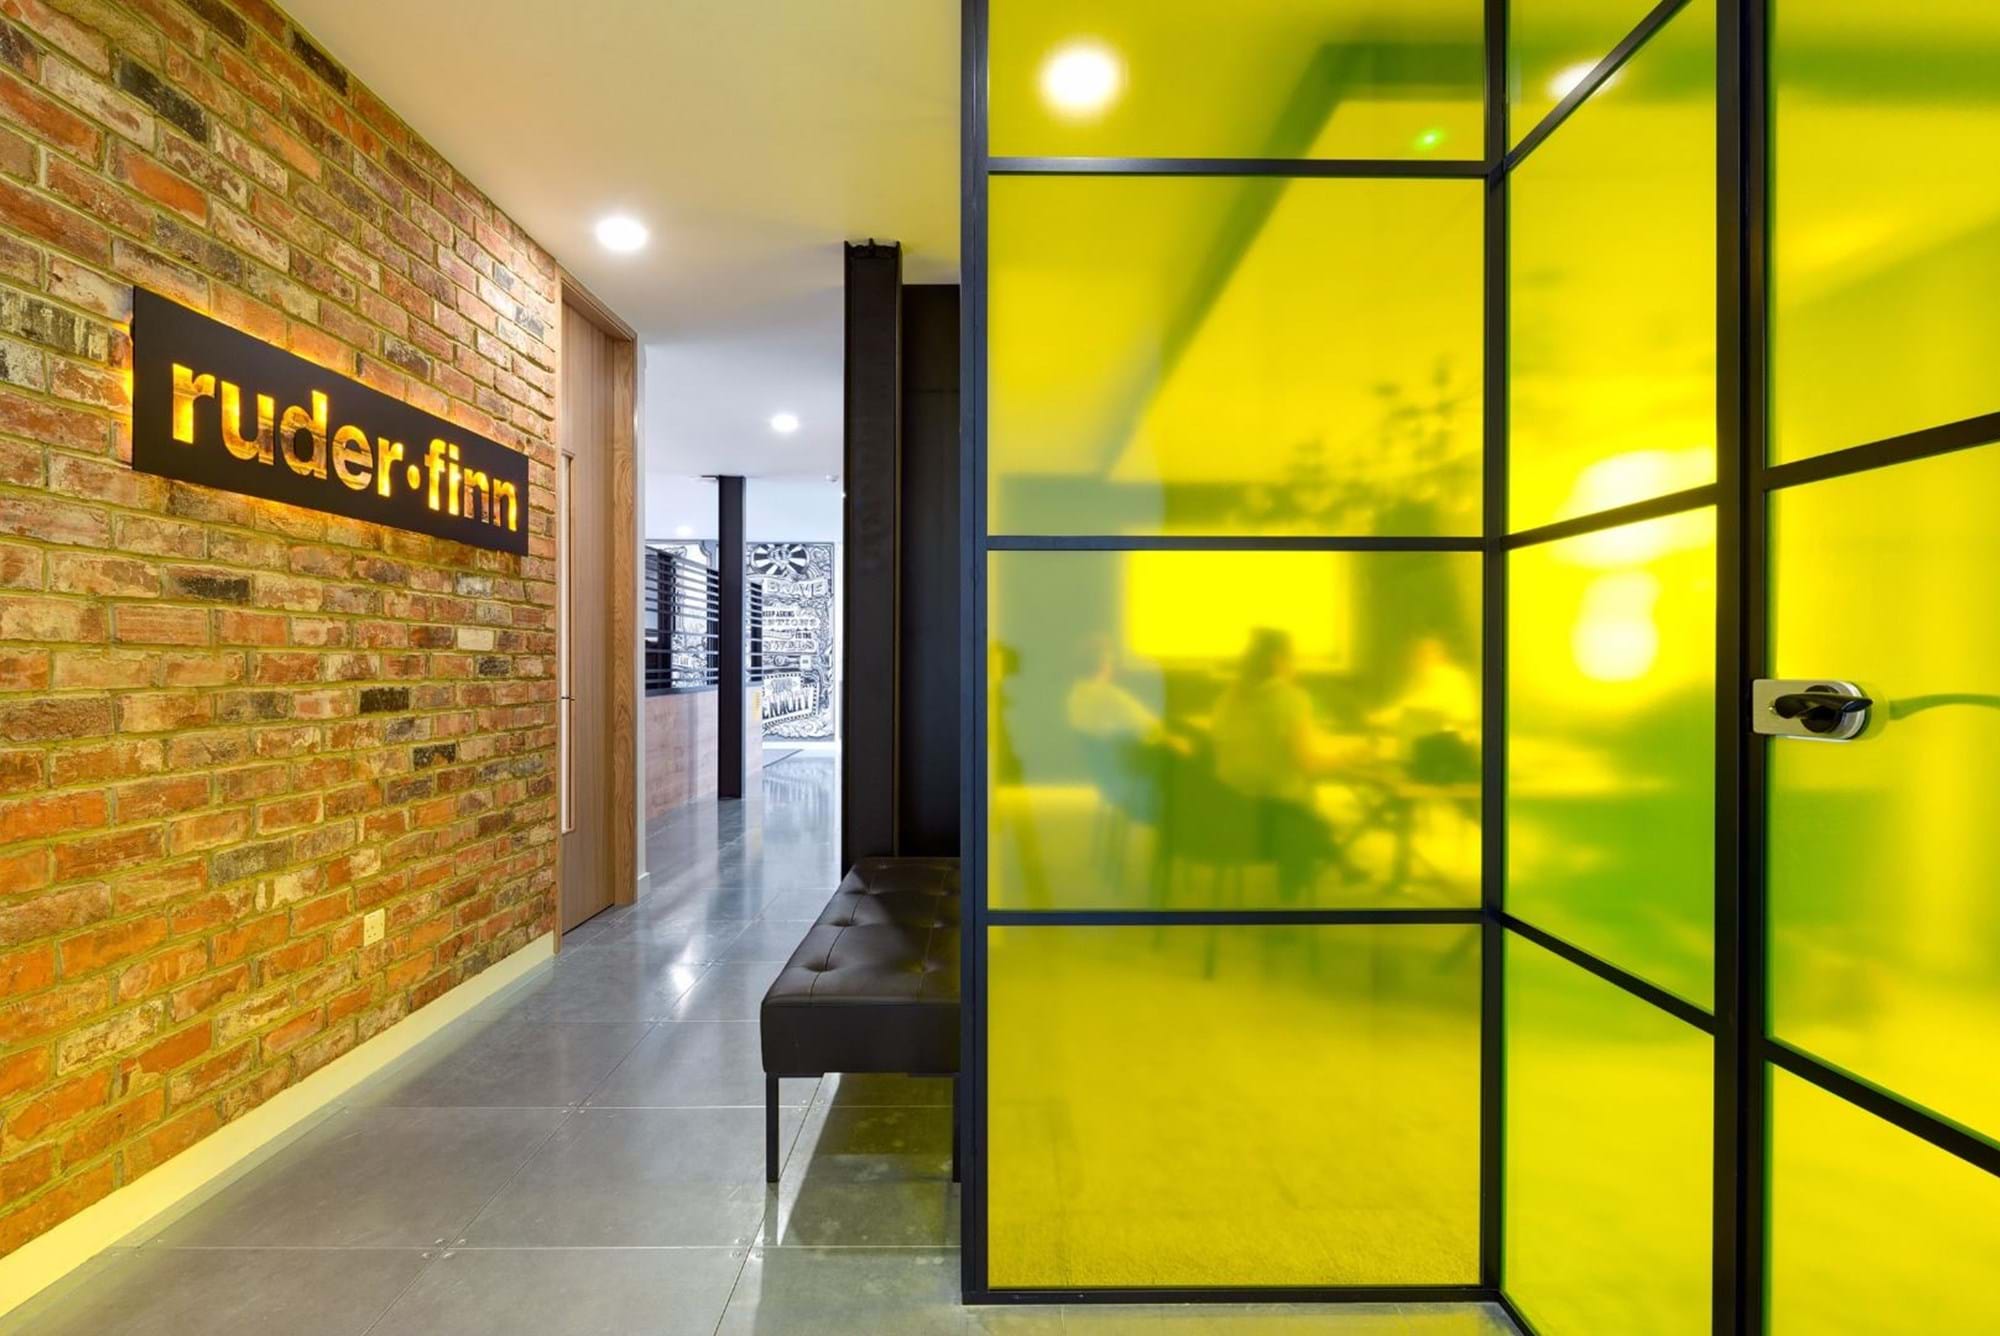 Modus Workspace office design, fit out and refurbishment - Ruderfinn - Ruder Finn 01 highres sRGB.jpg